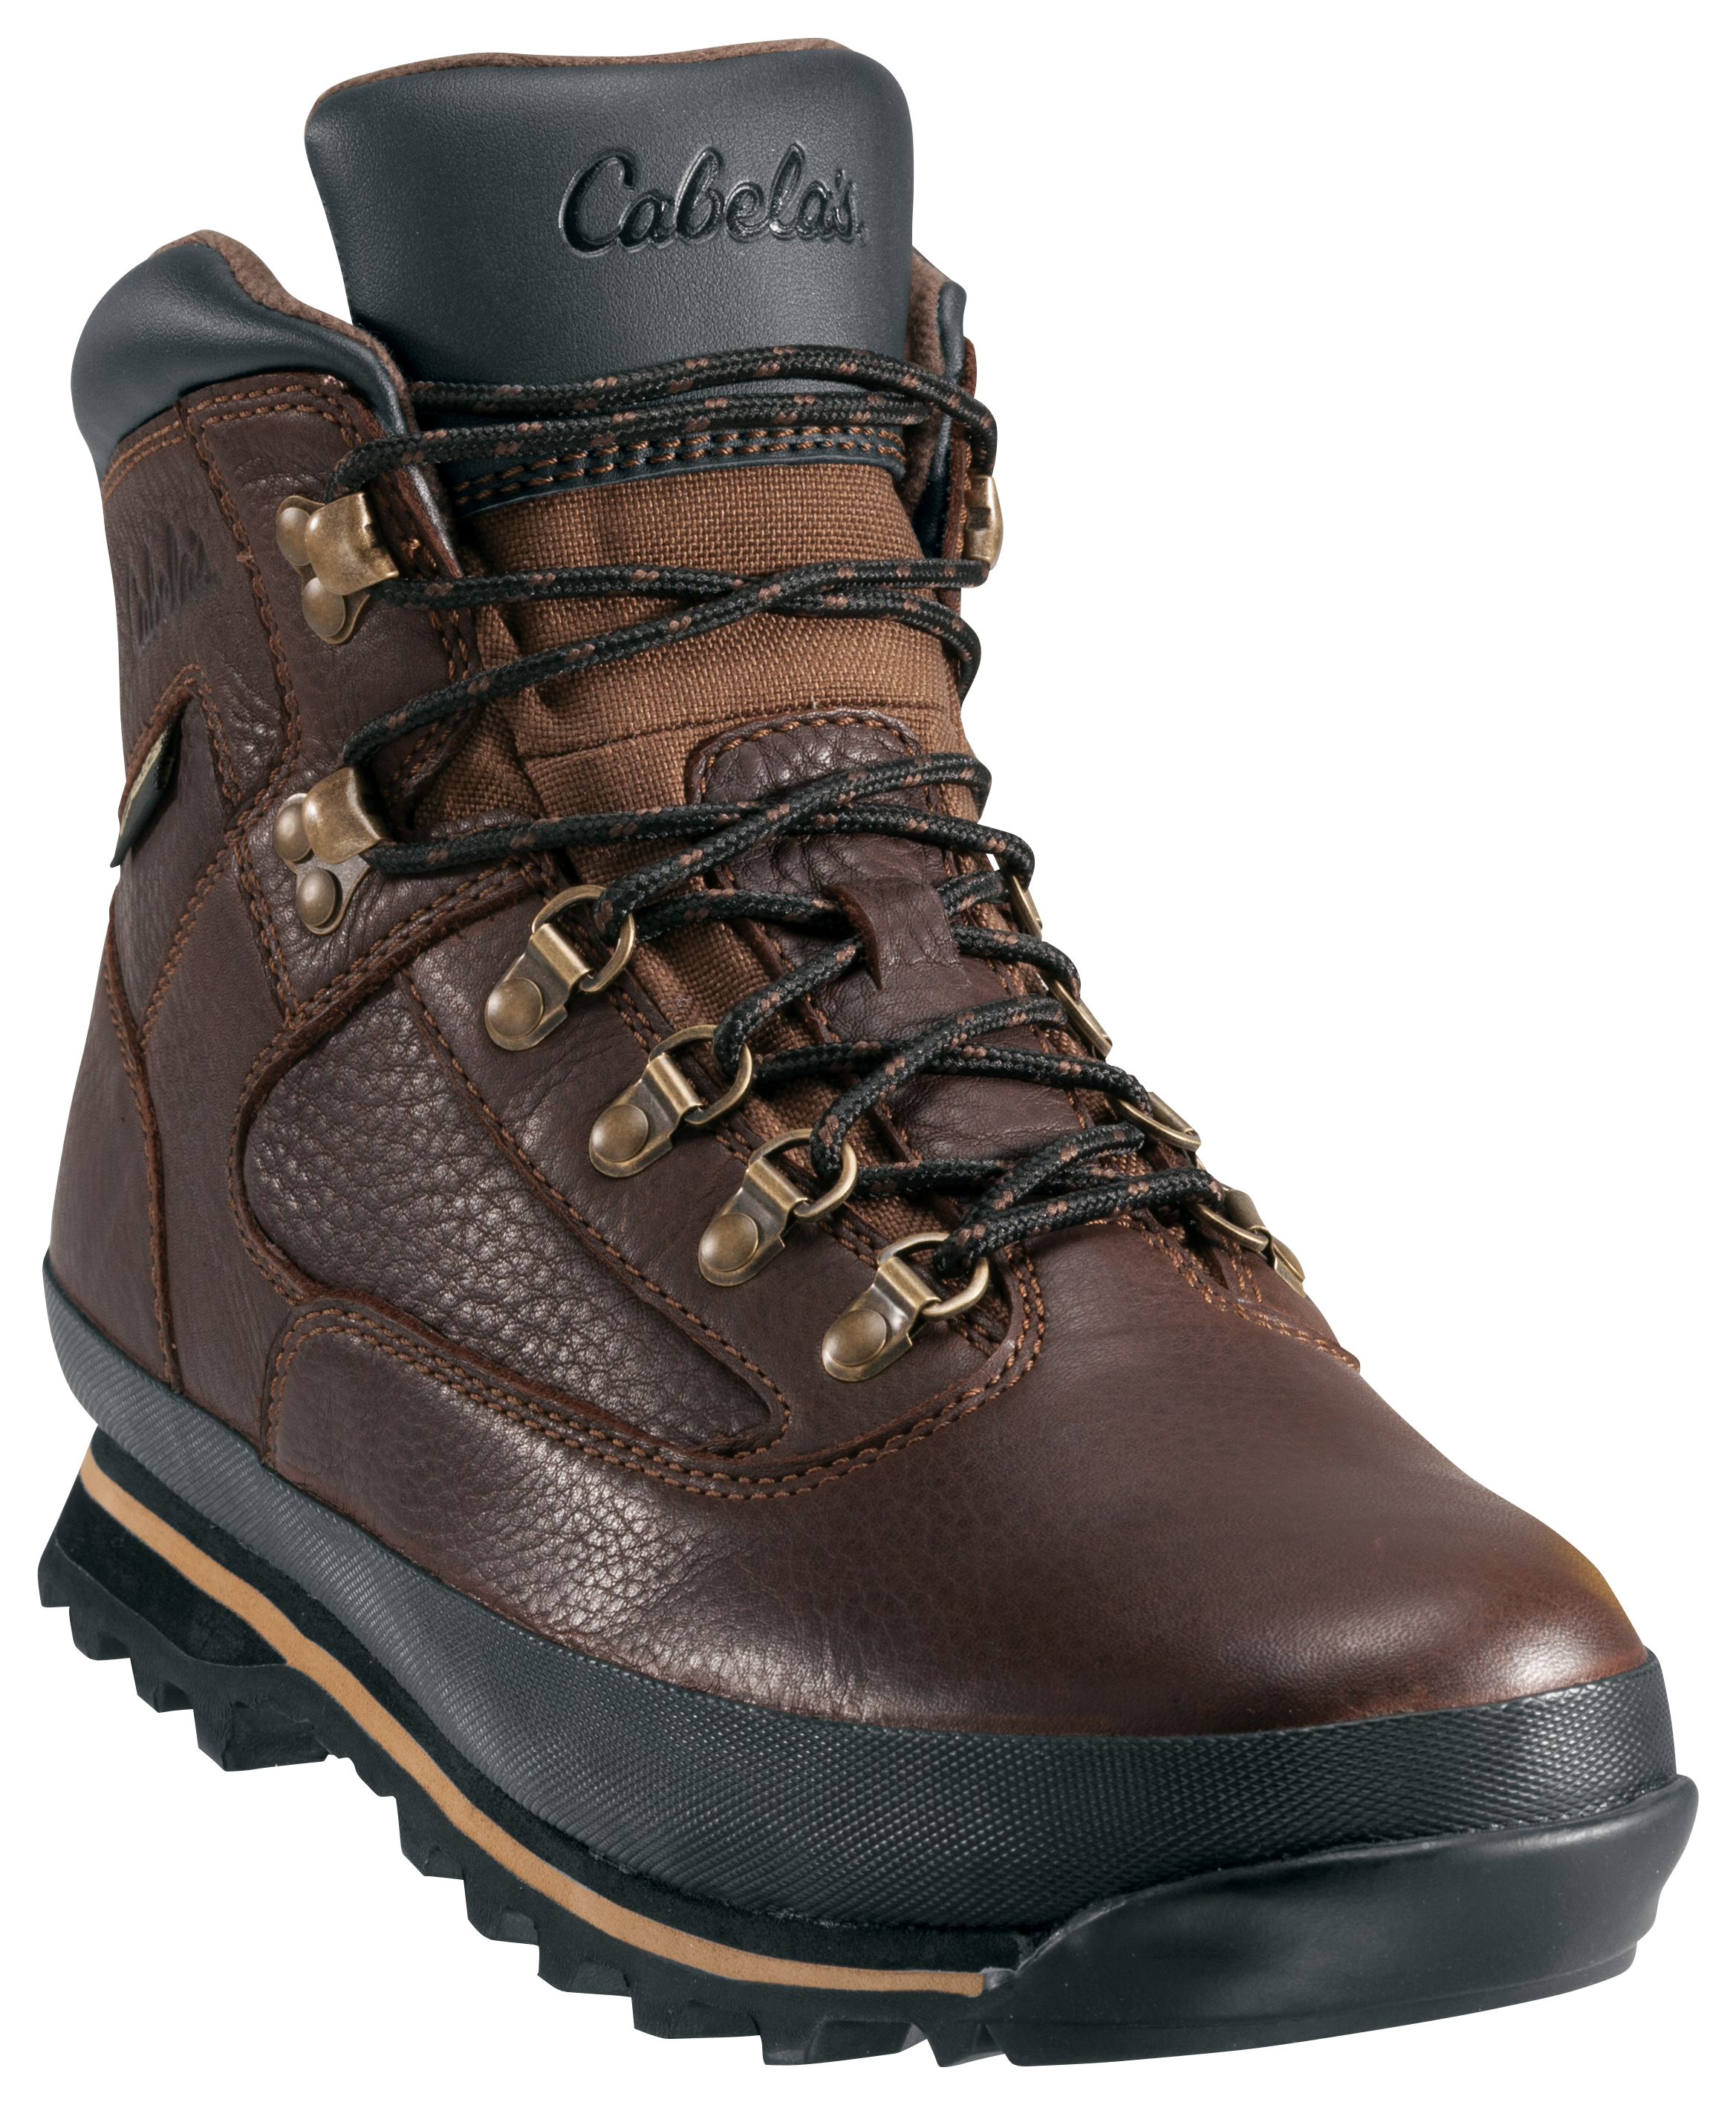 Cabela's Rimrock Mid GORE-TEX Hiking Boots for Men